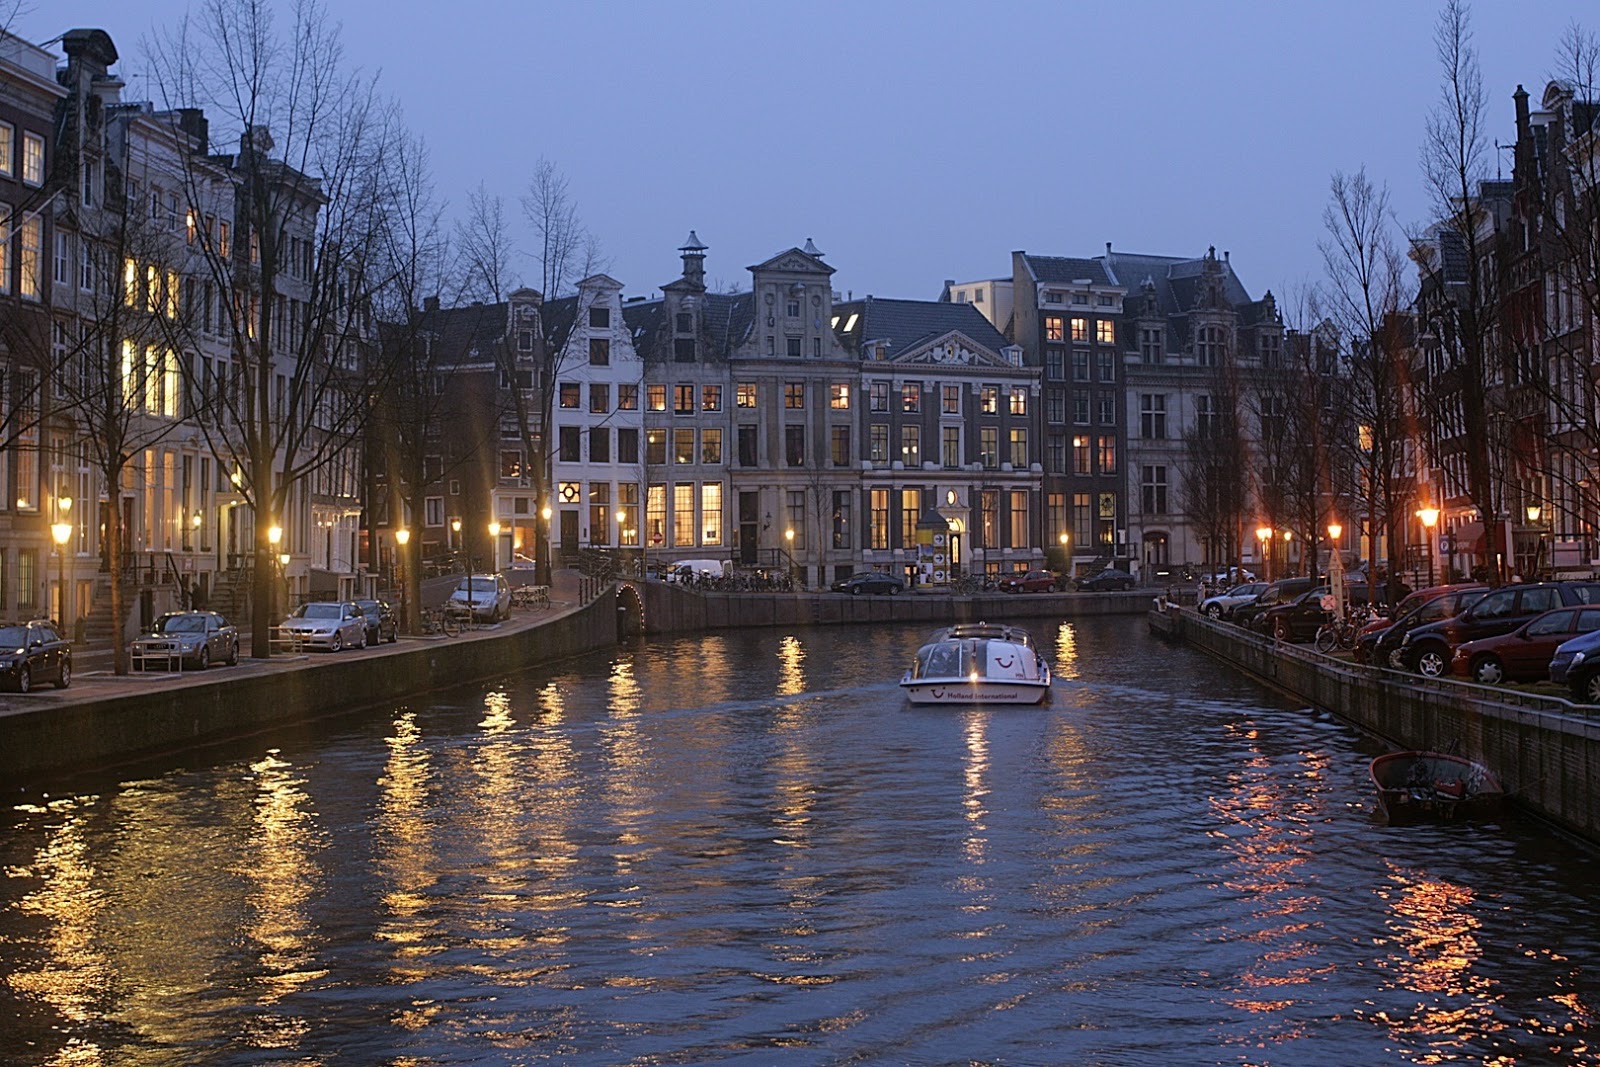 Amsterdam Beautiful City Of Europe | World For Travel